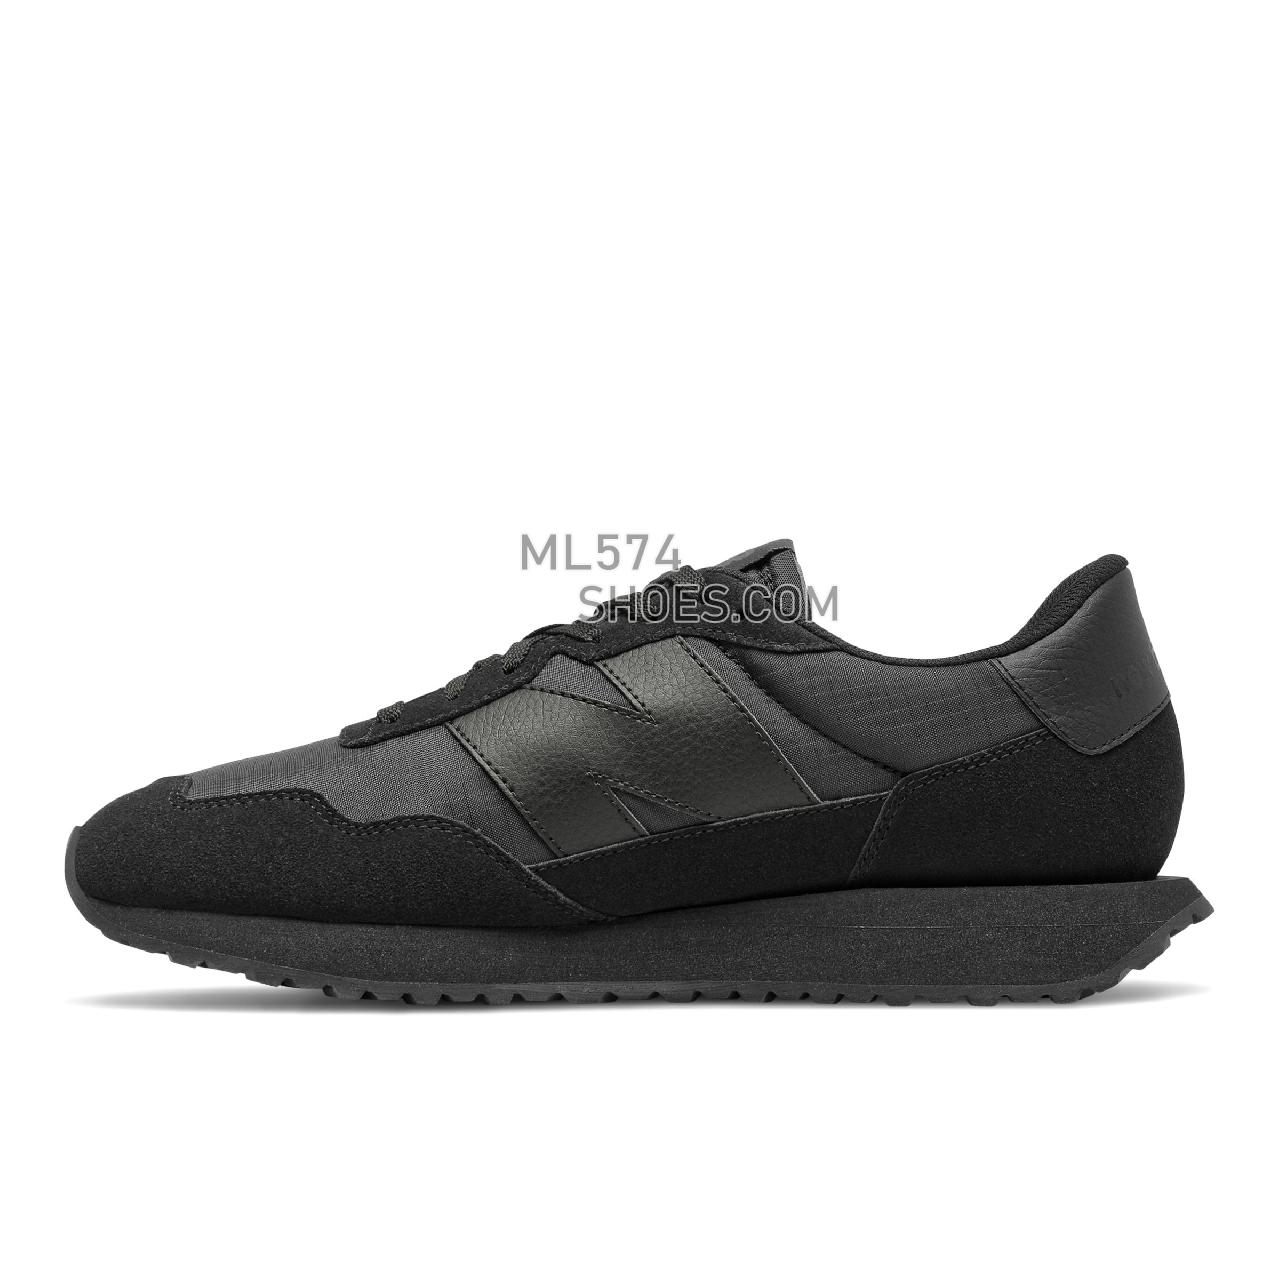 New Balance 237 - Men's Sport Style Sneakers - Black - MS237UX1